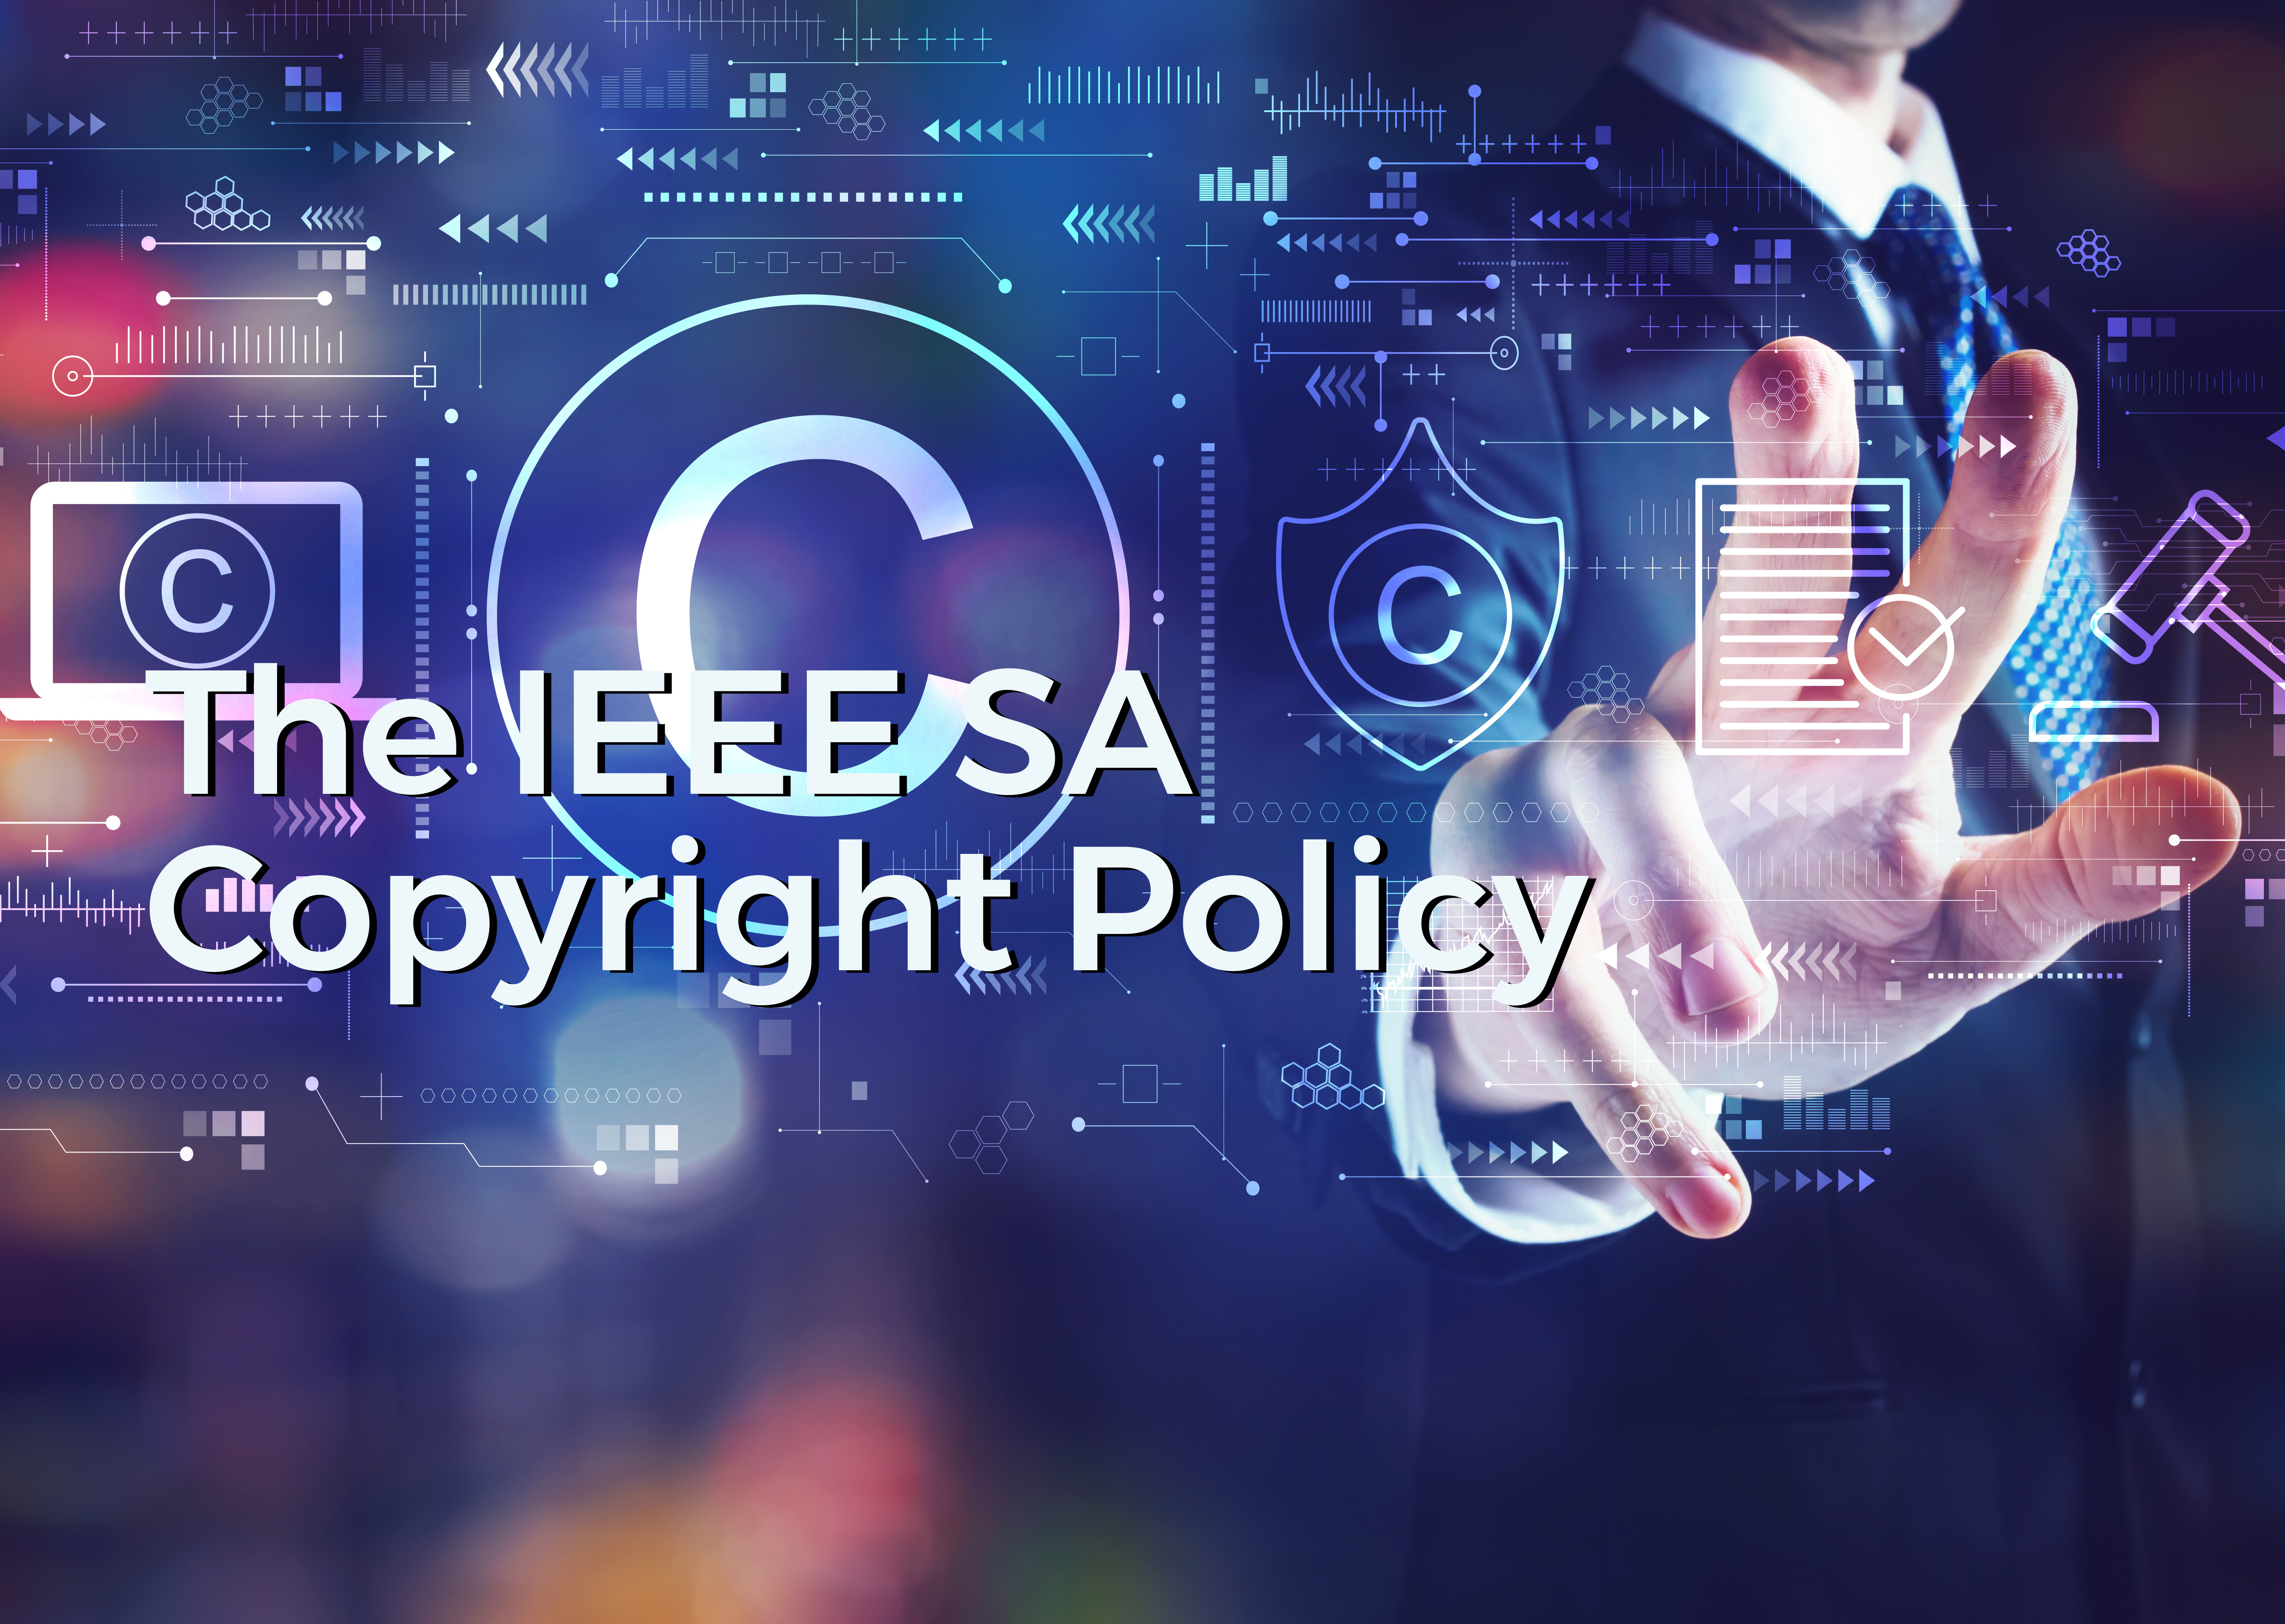 IEEE SA Copyright Policy